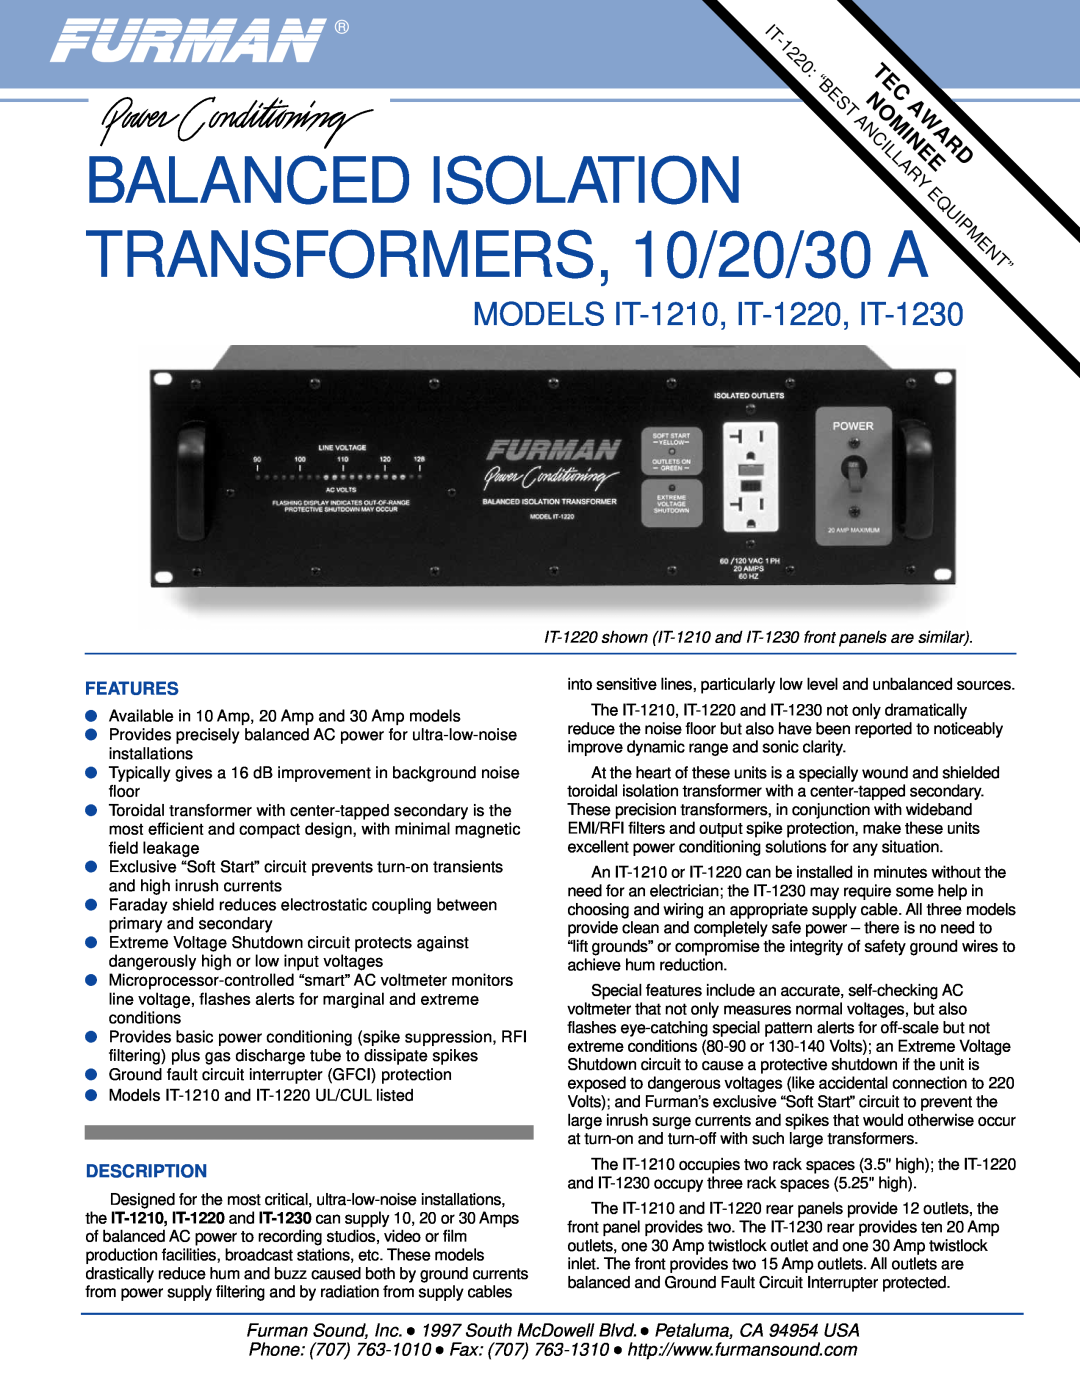 Furman Sound manual Ancillary, TRANSFORMERS, 10/20/30 A, Balanced Isolation, MODELS IT-1210, IT-1220, IT-1230, Nominee 